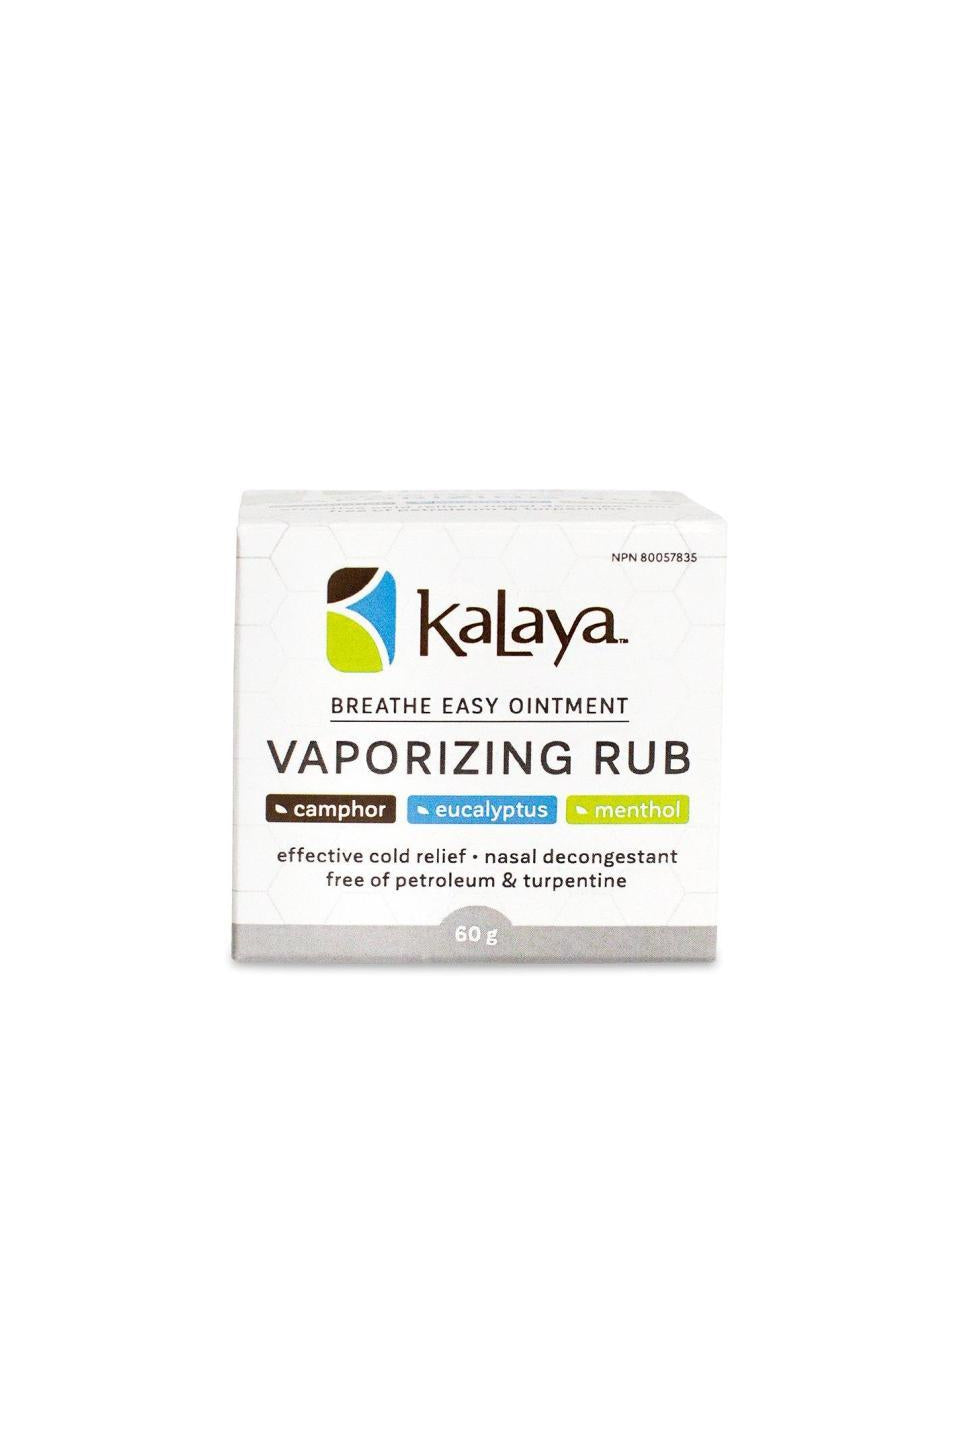 Kalaya Breathe Easy Ointment Vaporizing Rub 60g